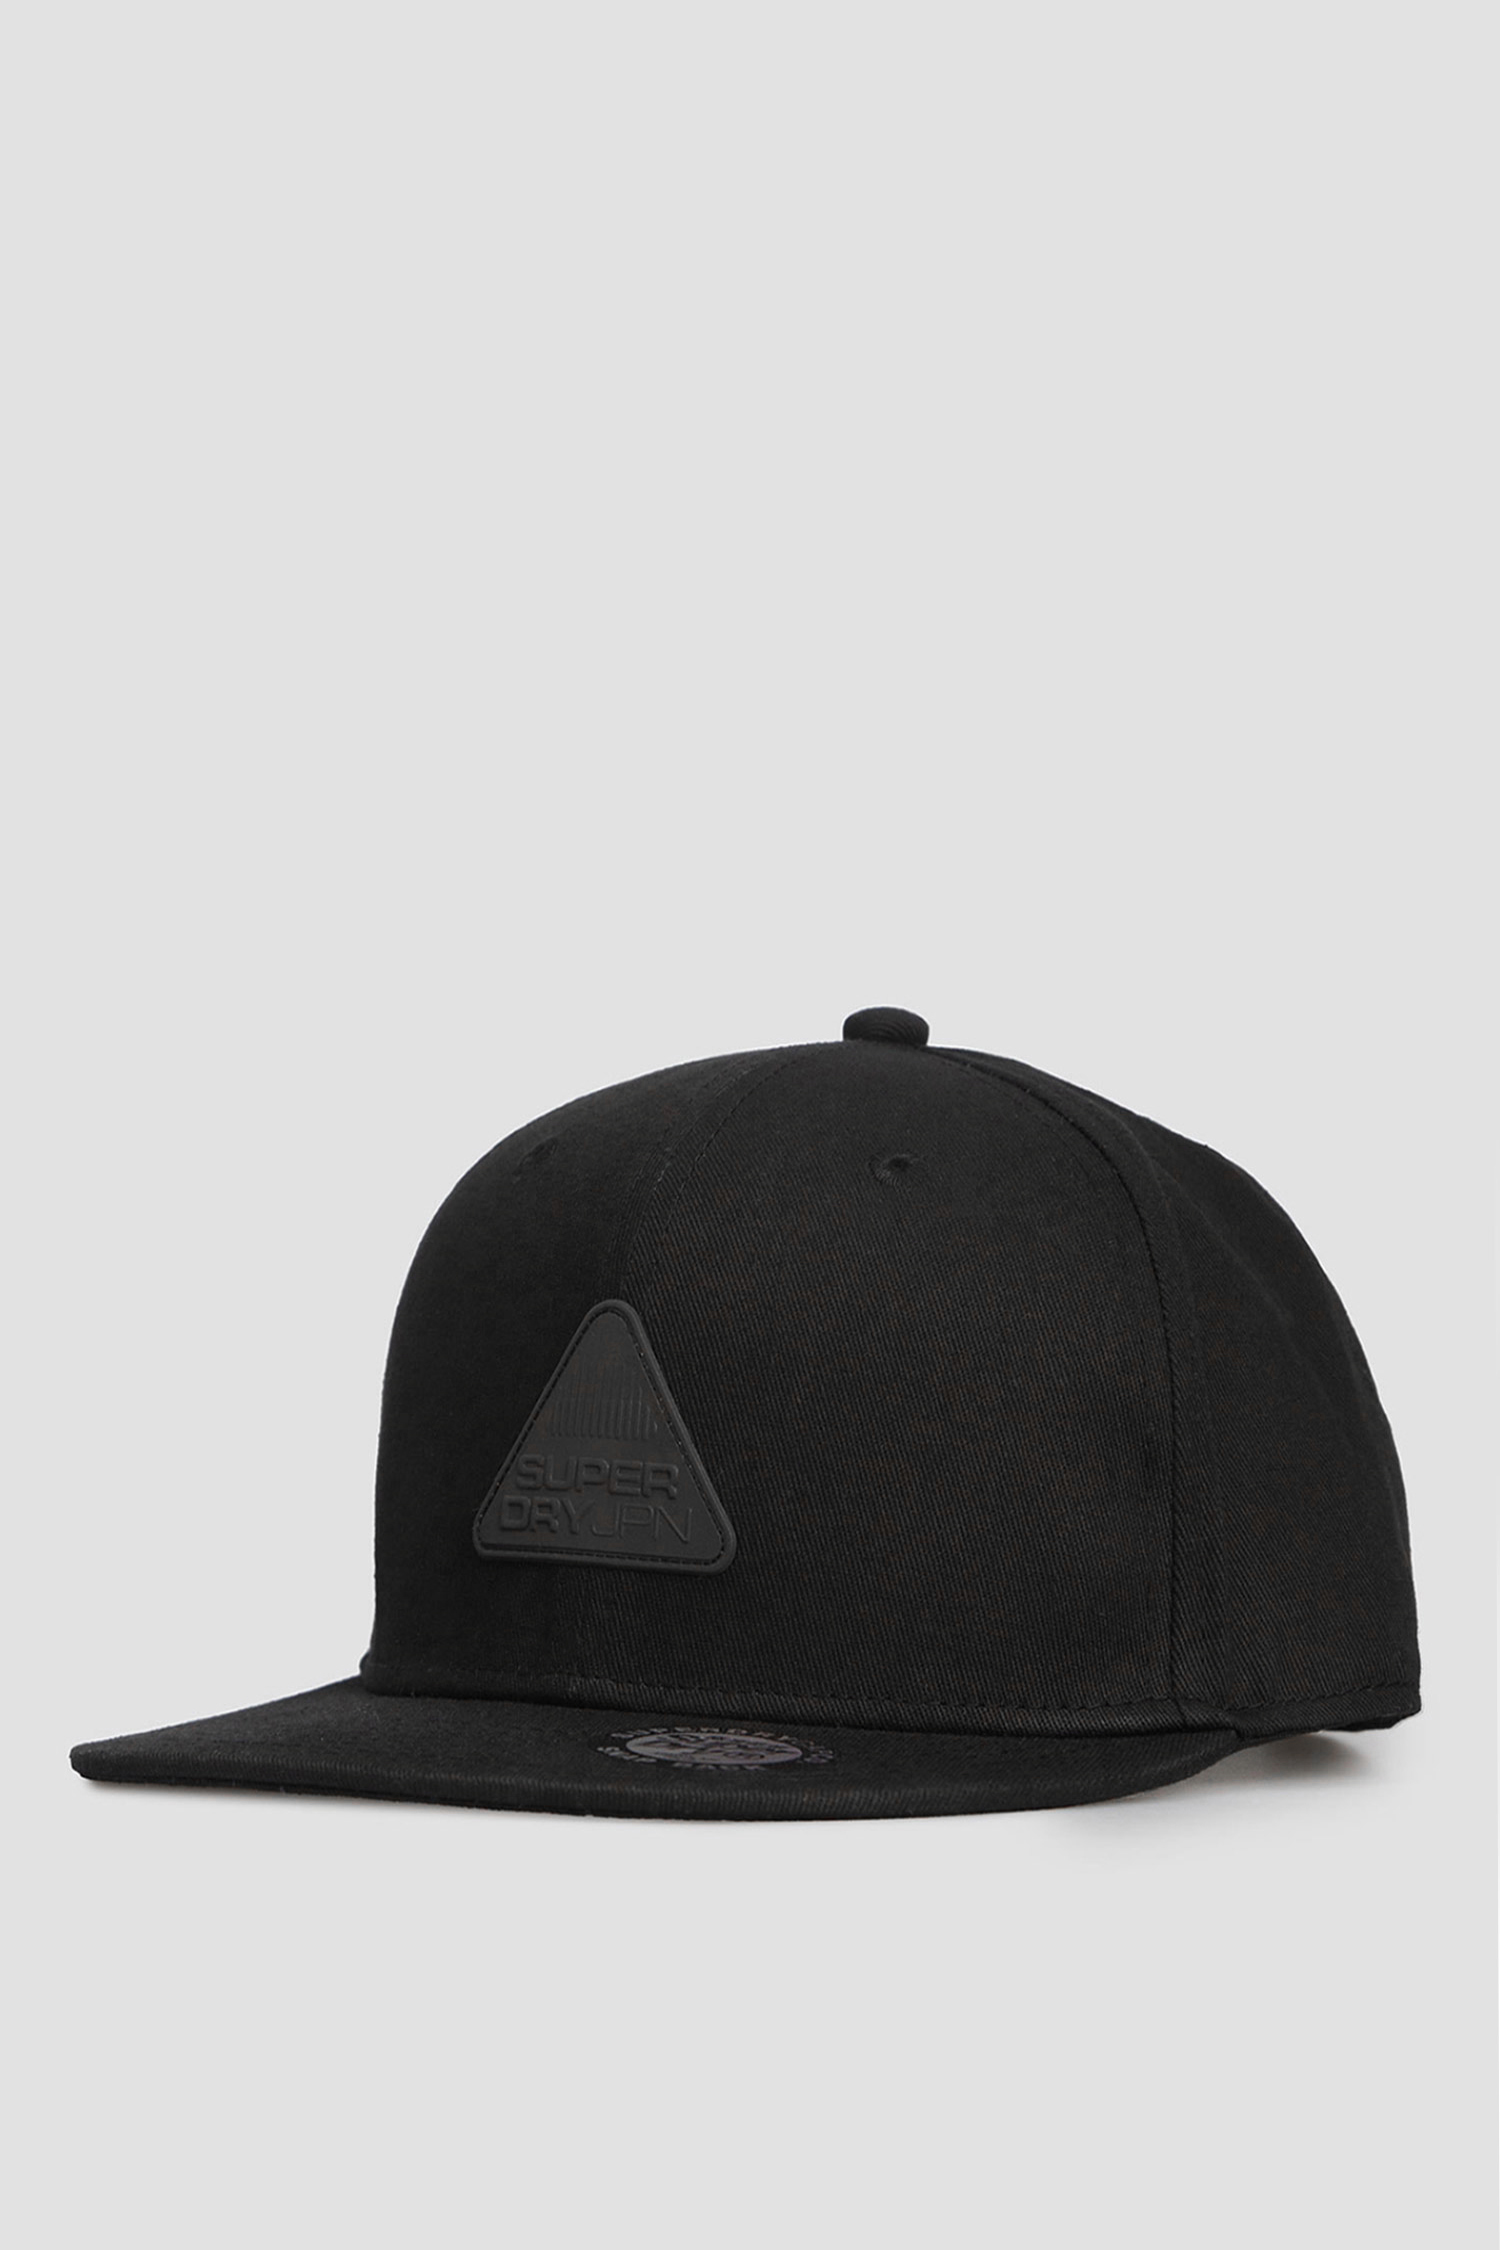 Мужская черная кепка SuperDry M9010011A;02A